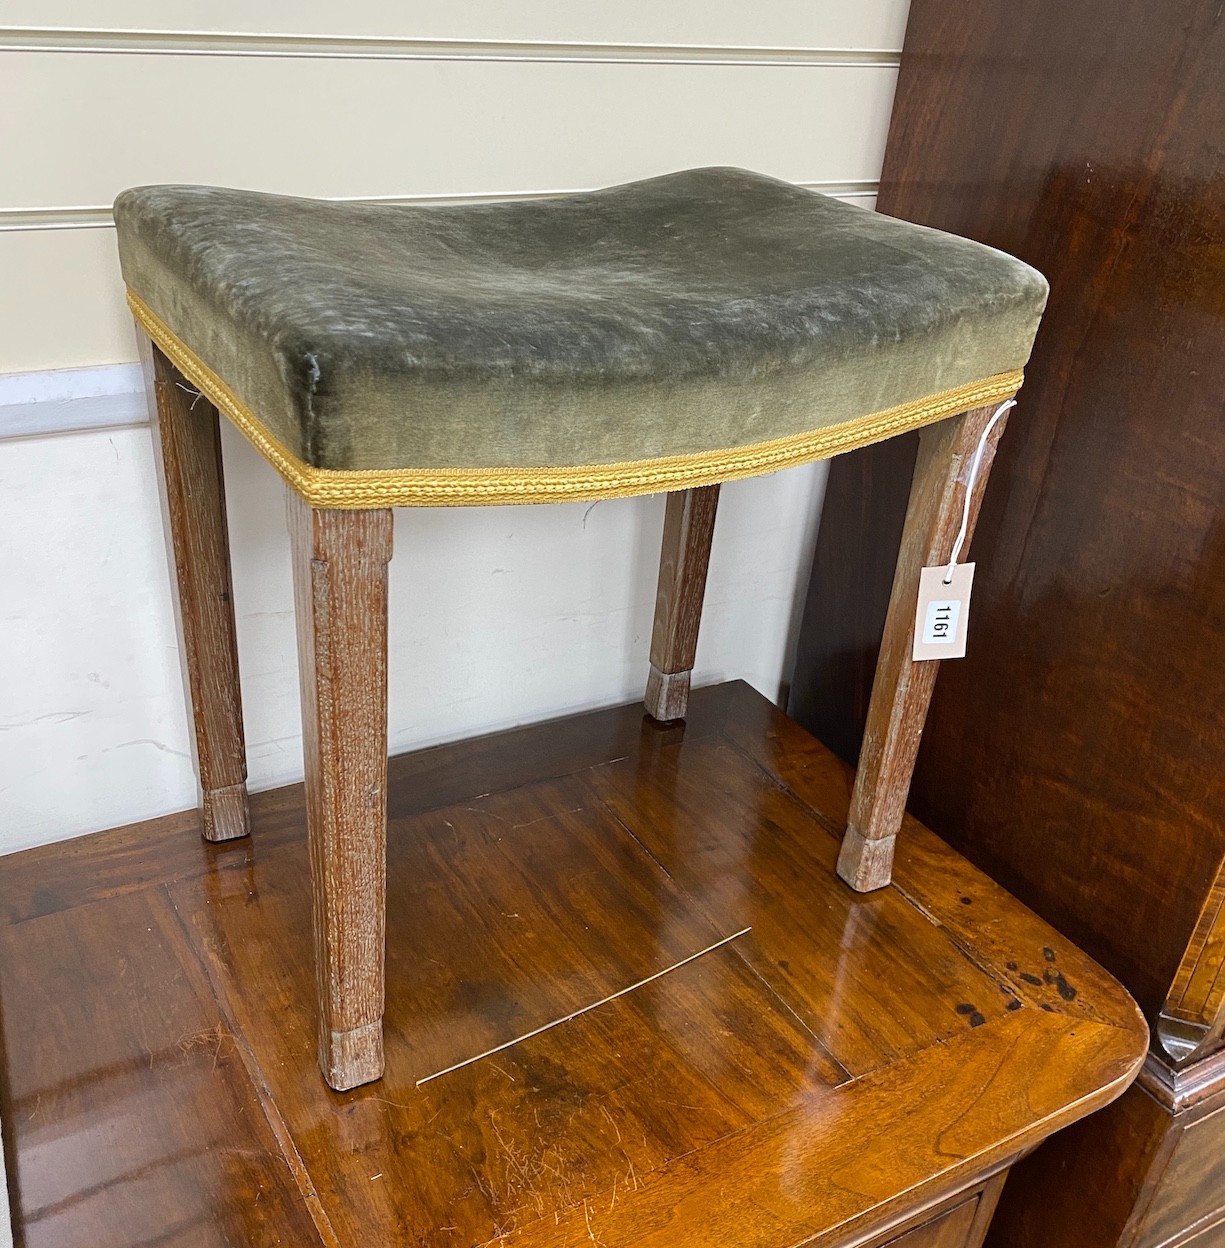 An Elizabeth II Coronation stool, length 46cm, depth 32cm, height 47cm